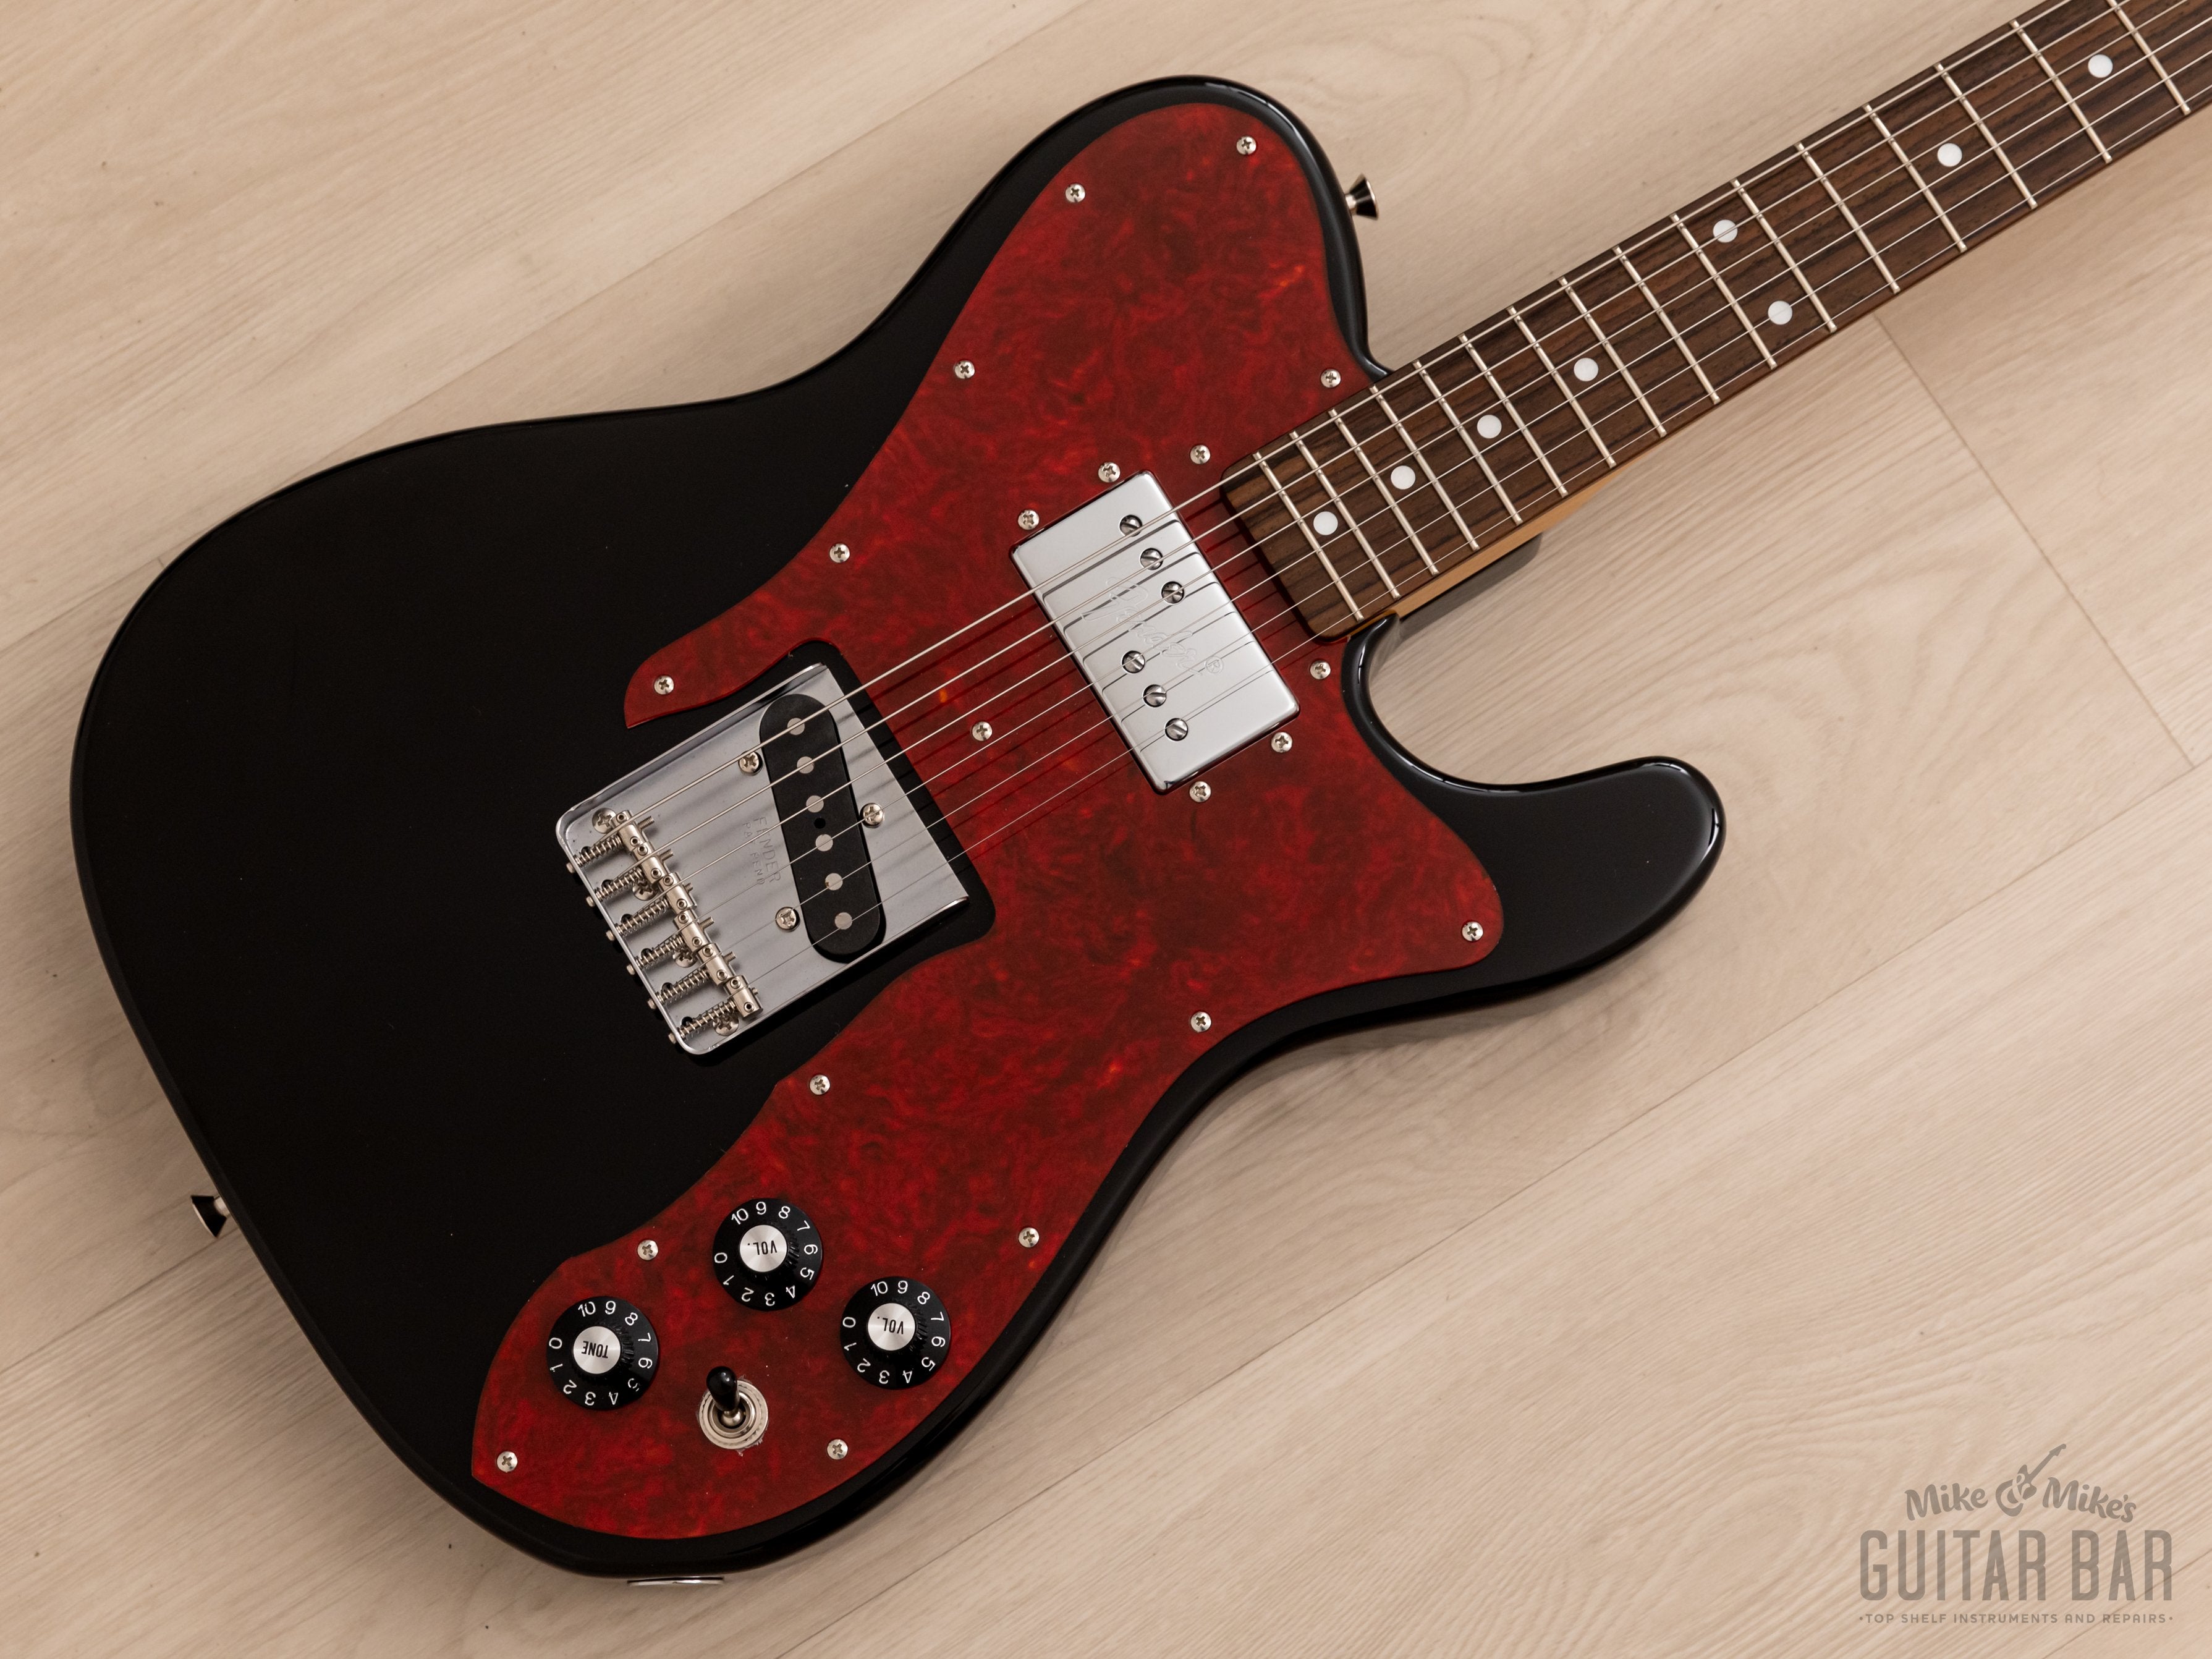 2012 Fender Telecaster Custom Futoshi Abe Signature TC72TS Black Near-Mint w/ Case & Tags, Japan MIJ